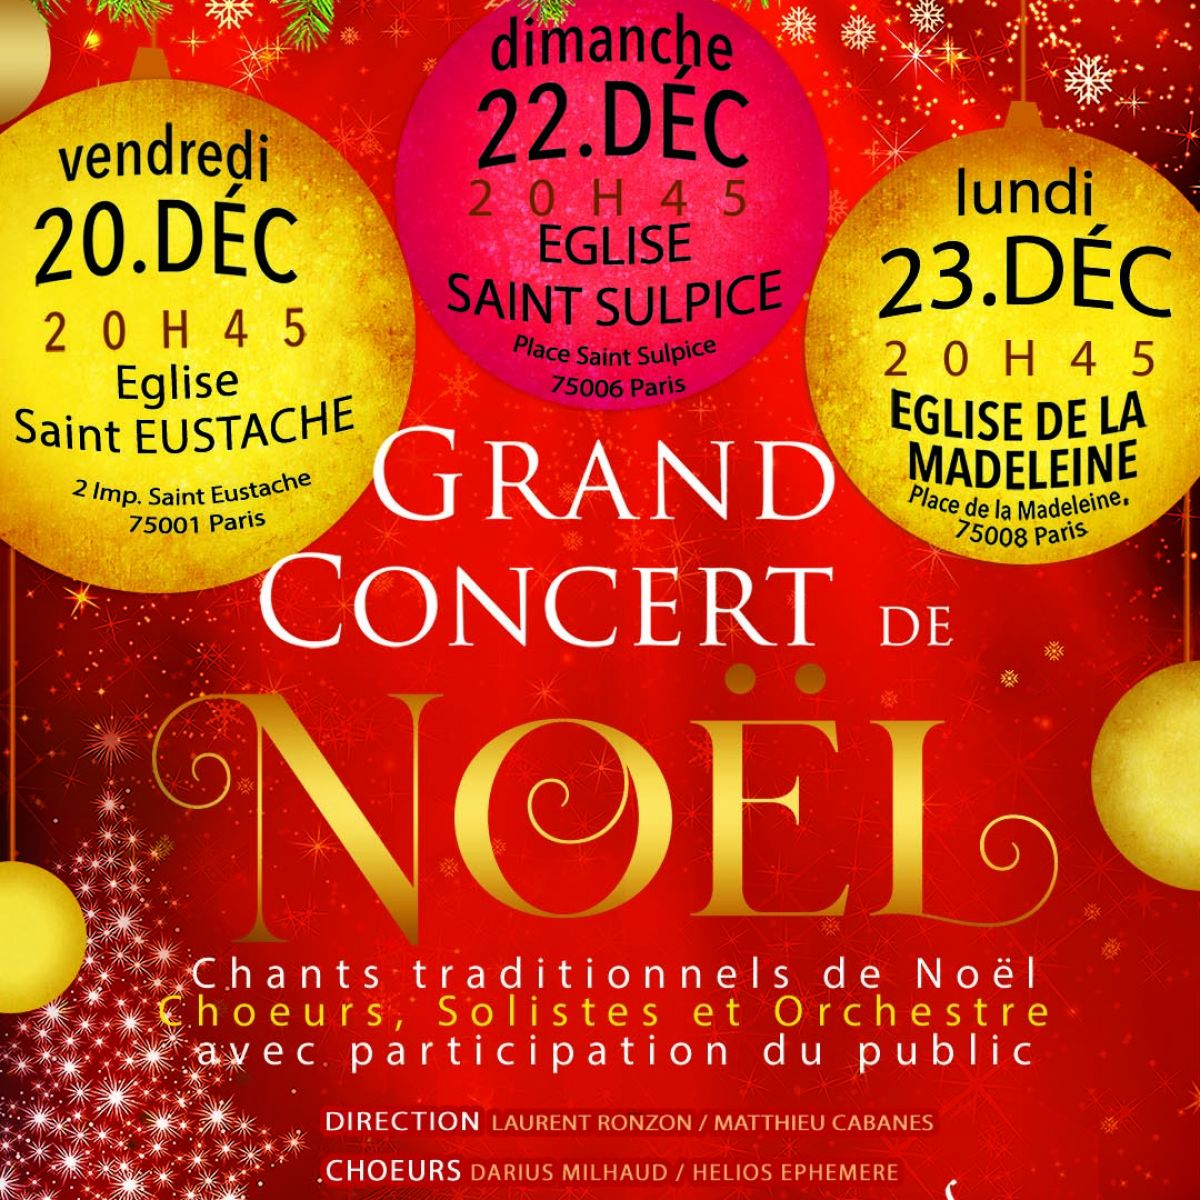 Grand Concert de Chants Traditionnels de Noël